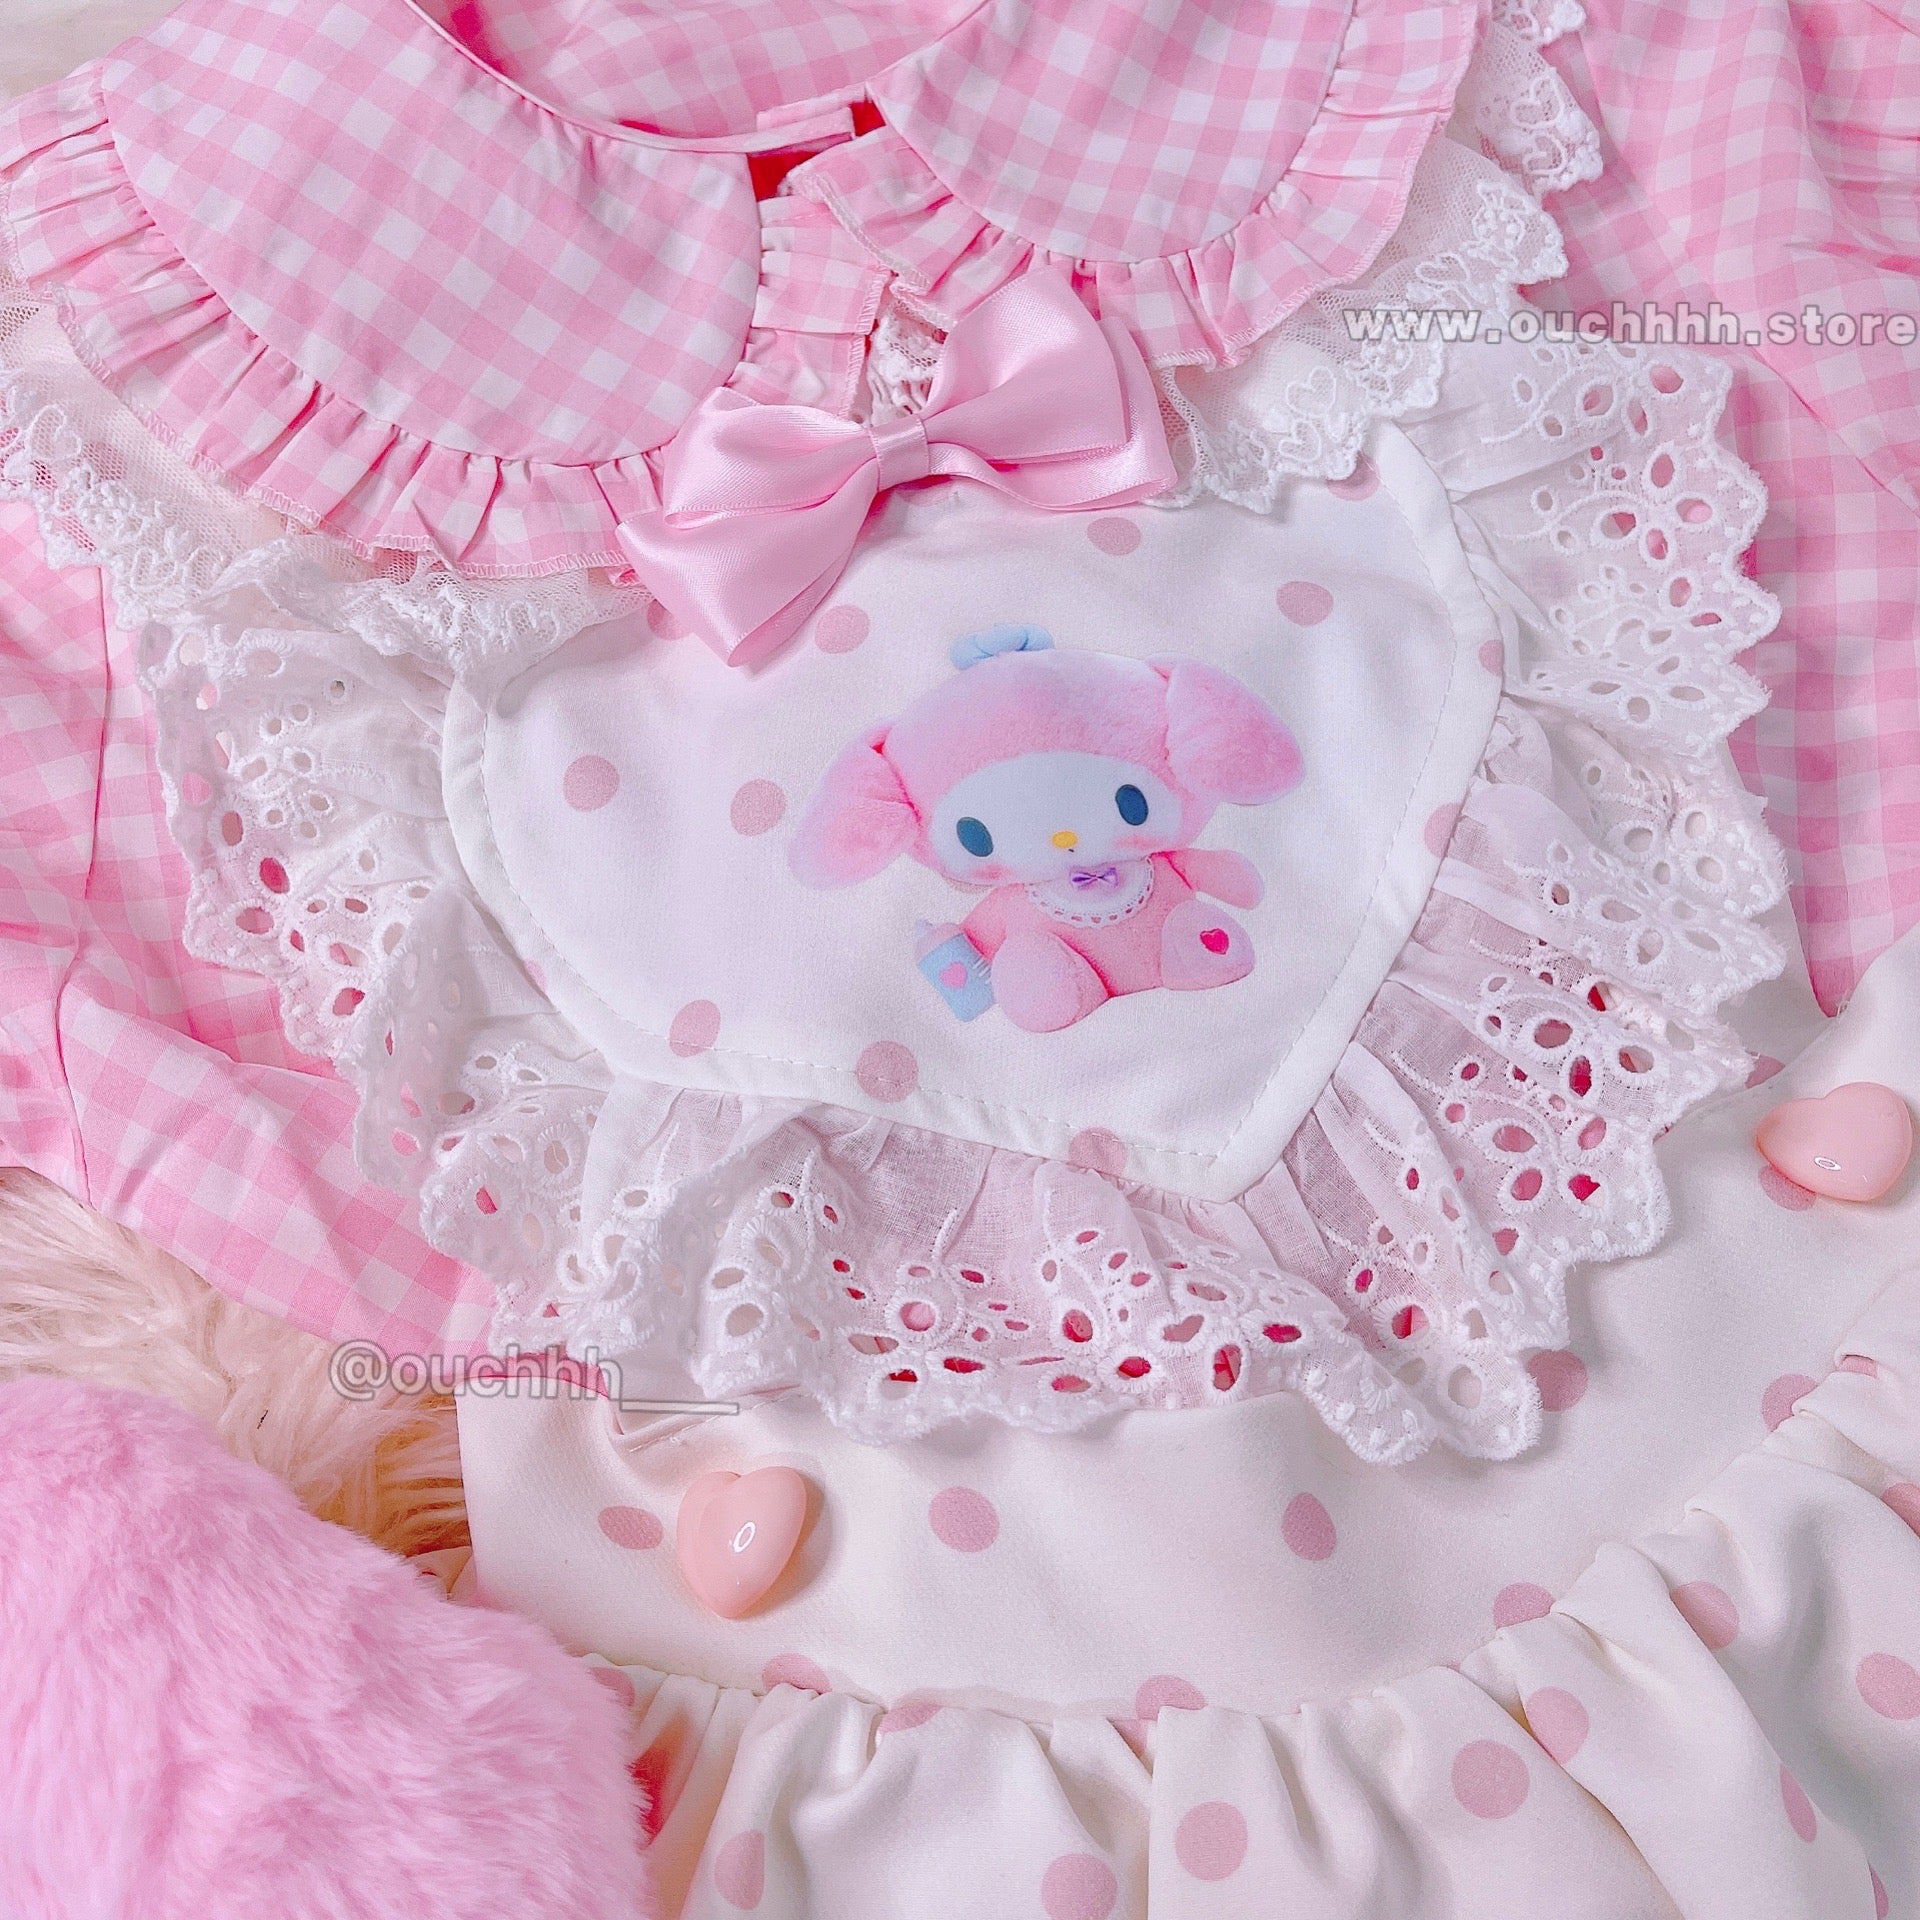 Baby Melody Candyland Dress